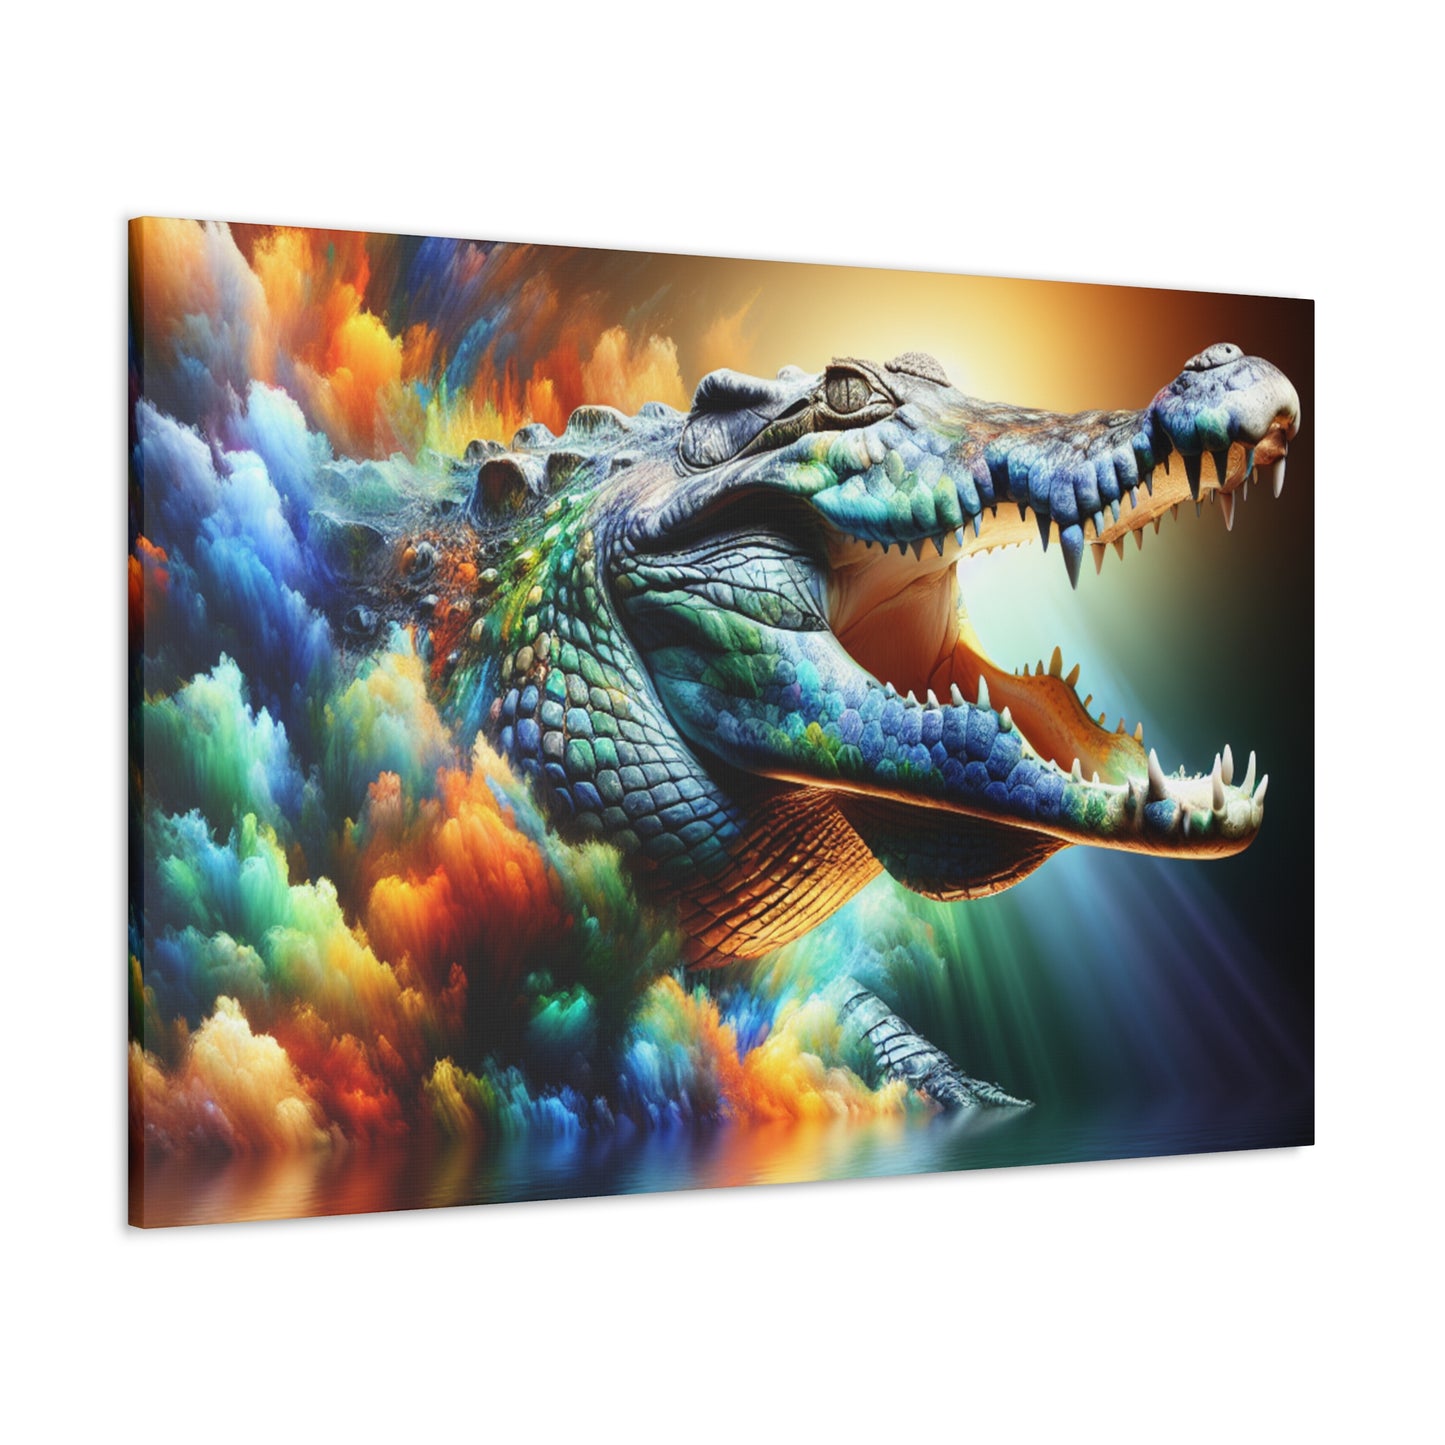 Jawbreaker Croc- Canvas